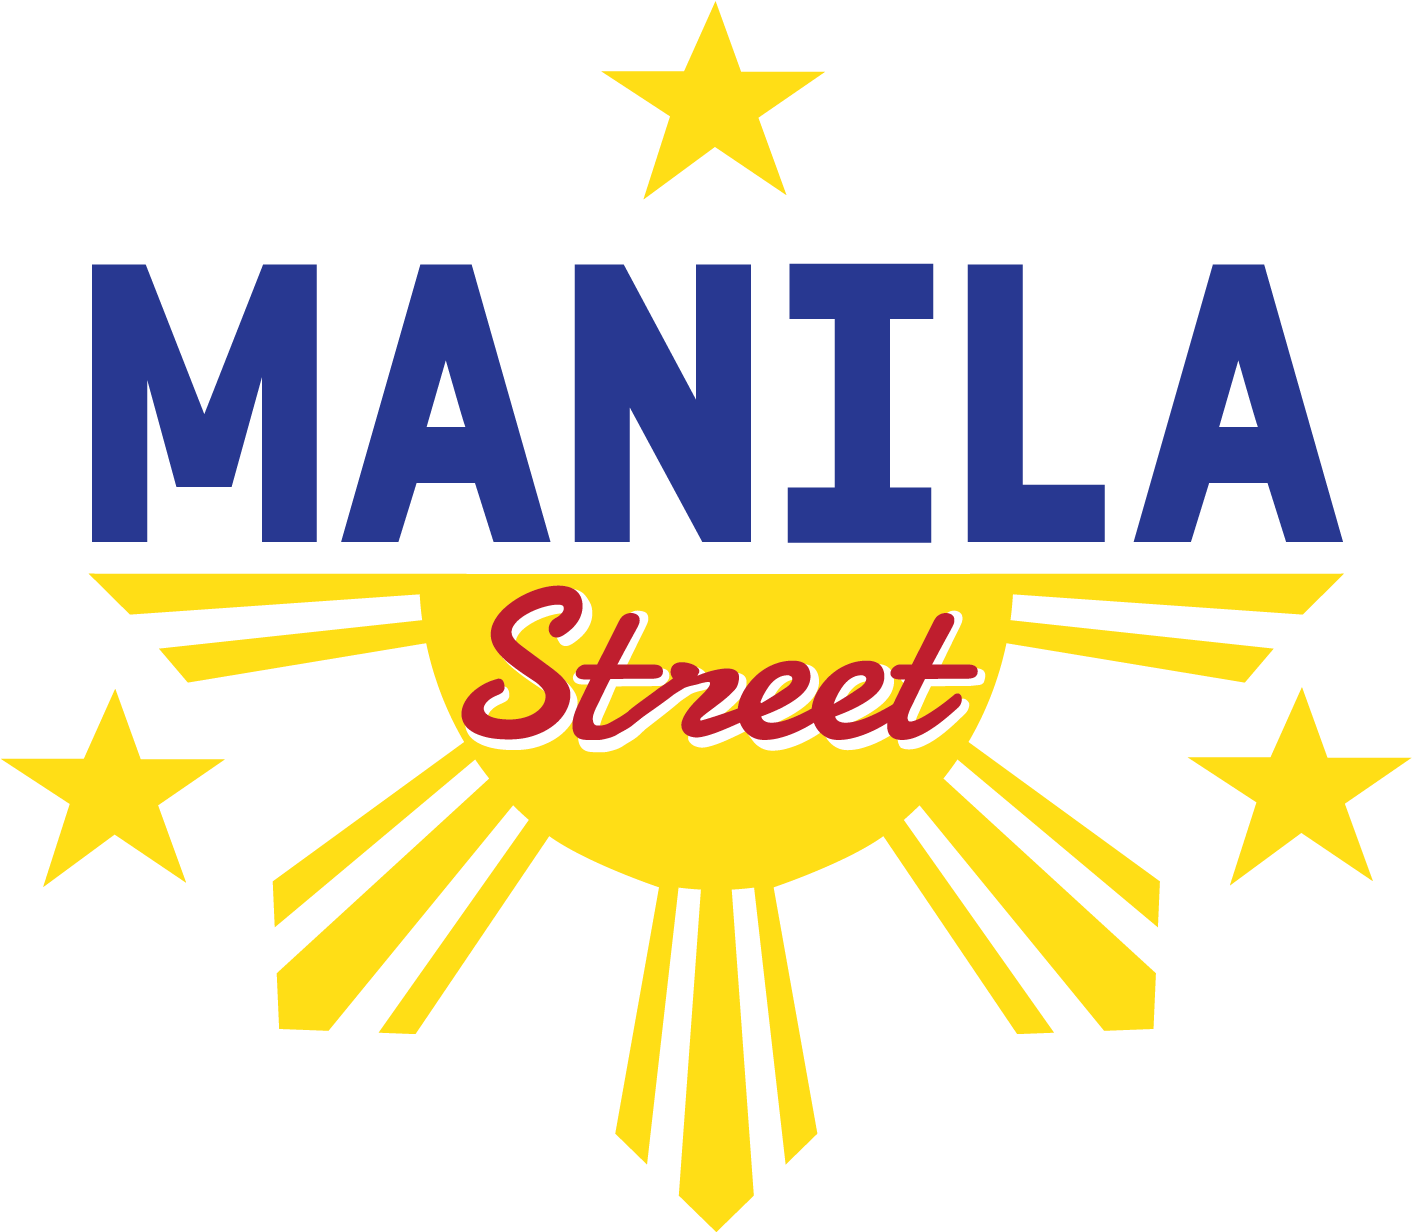 Manila Street